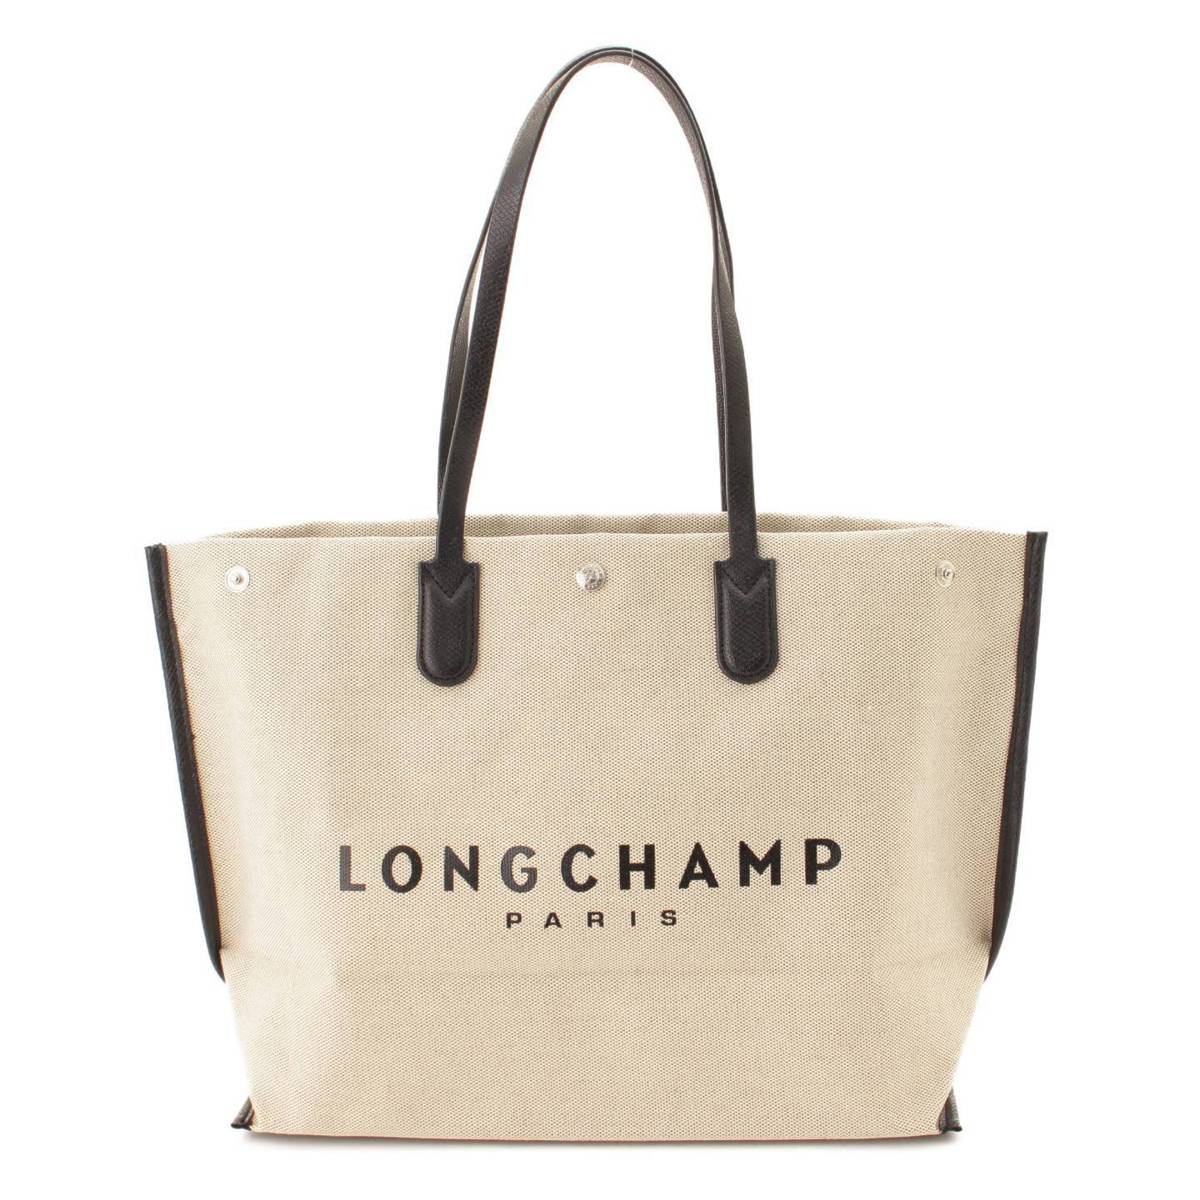 V(Longchamp) S LoX~U[ g[gobO VbsOobO 10090 i`